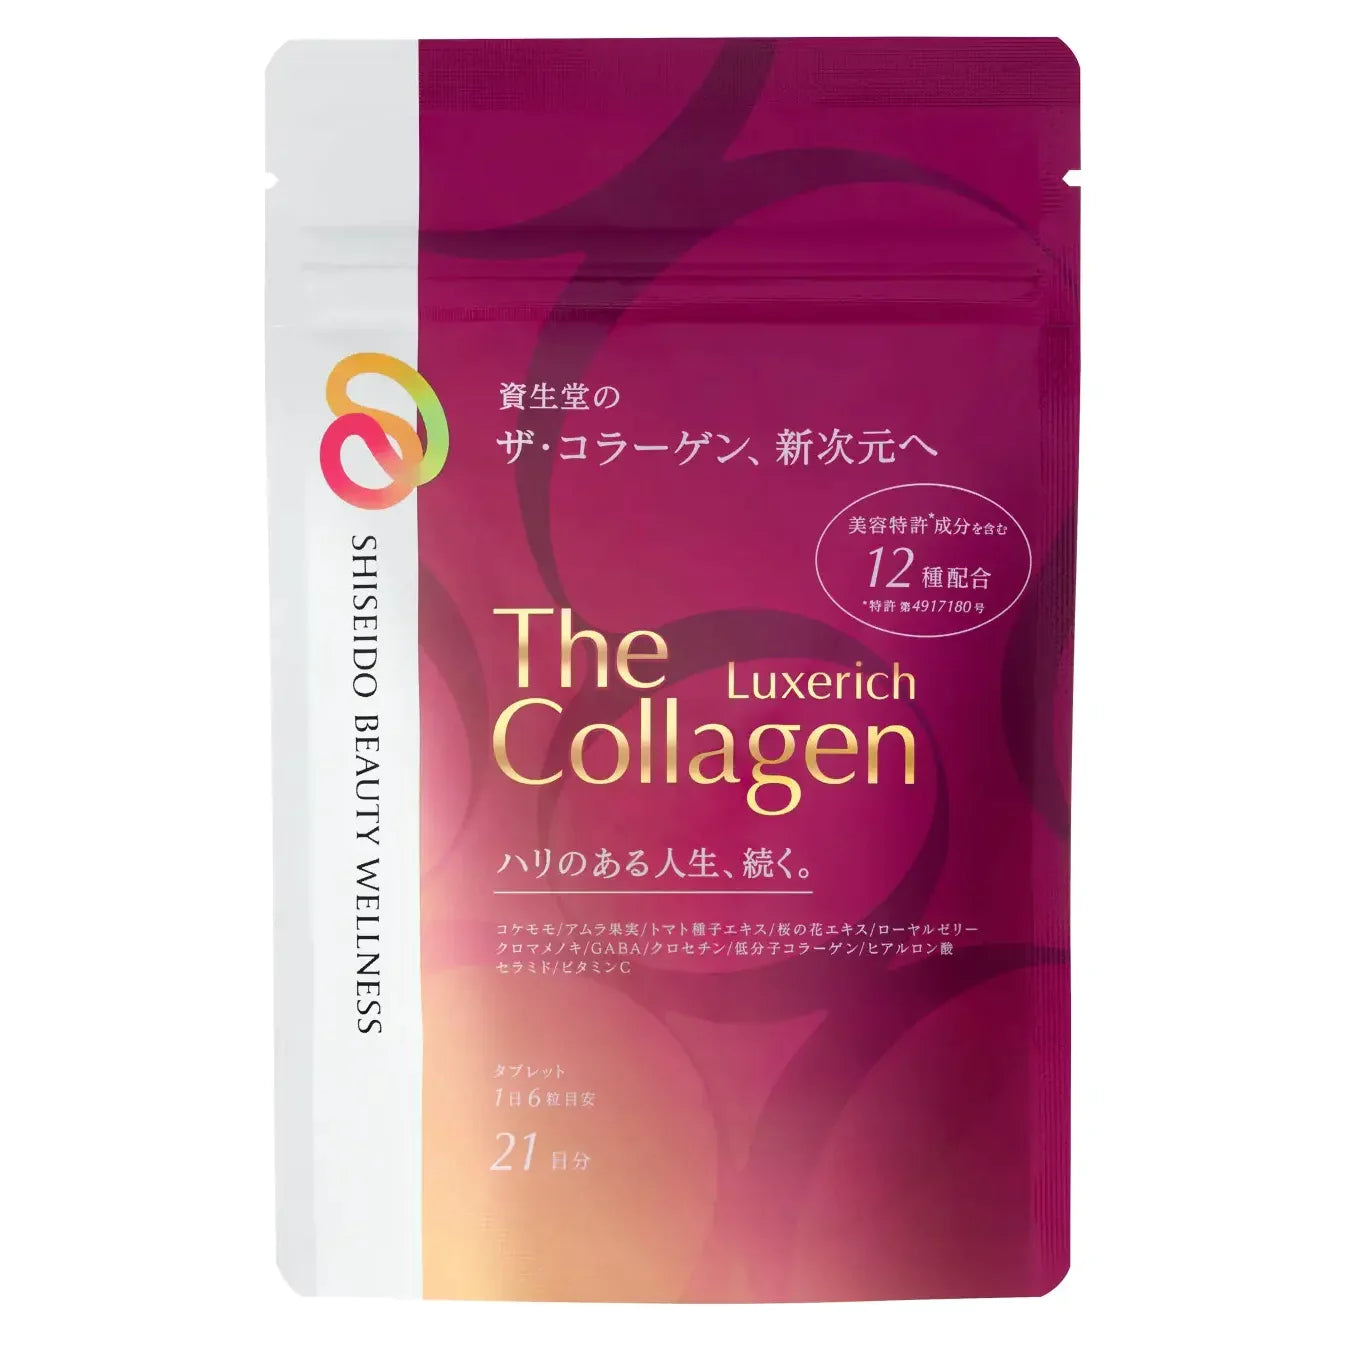 Shiseido The Collagen Luxe Rich Tablets Beauty Supplement 126 Pills